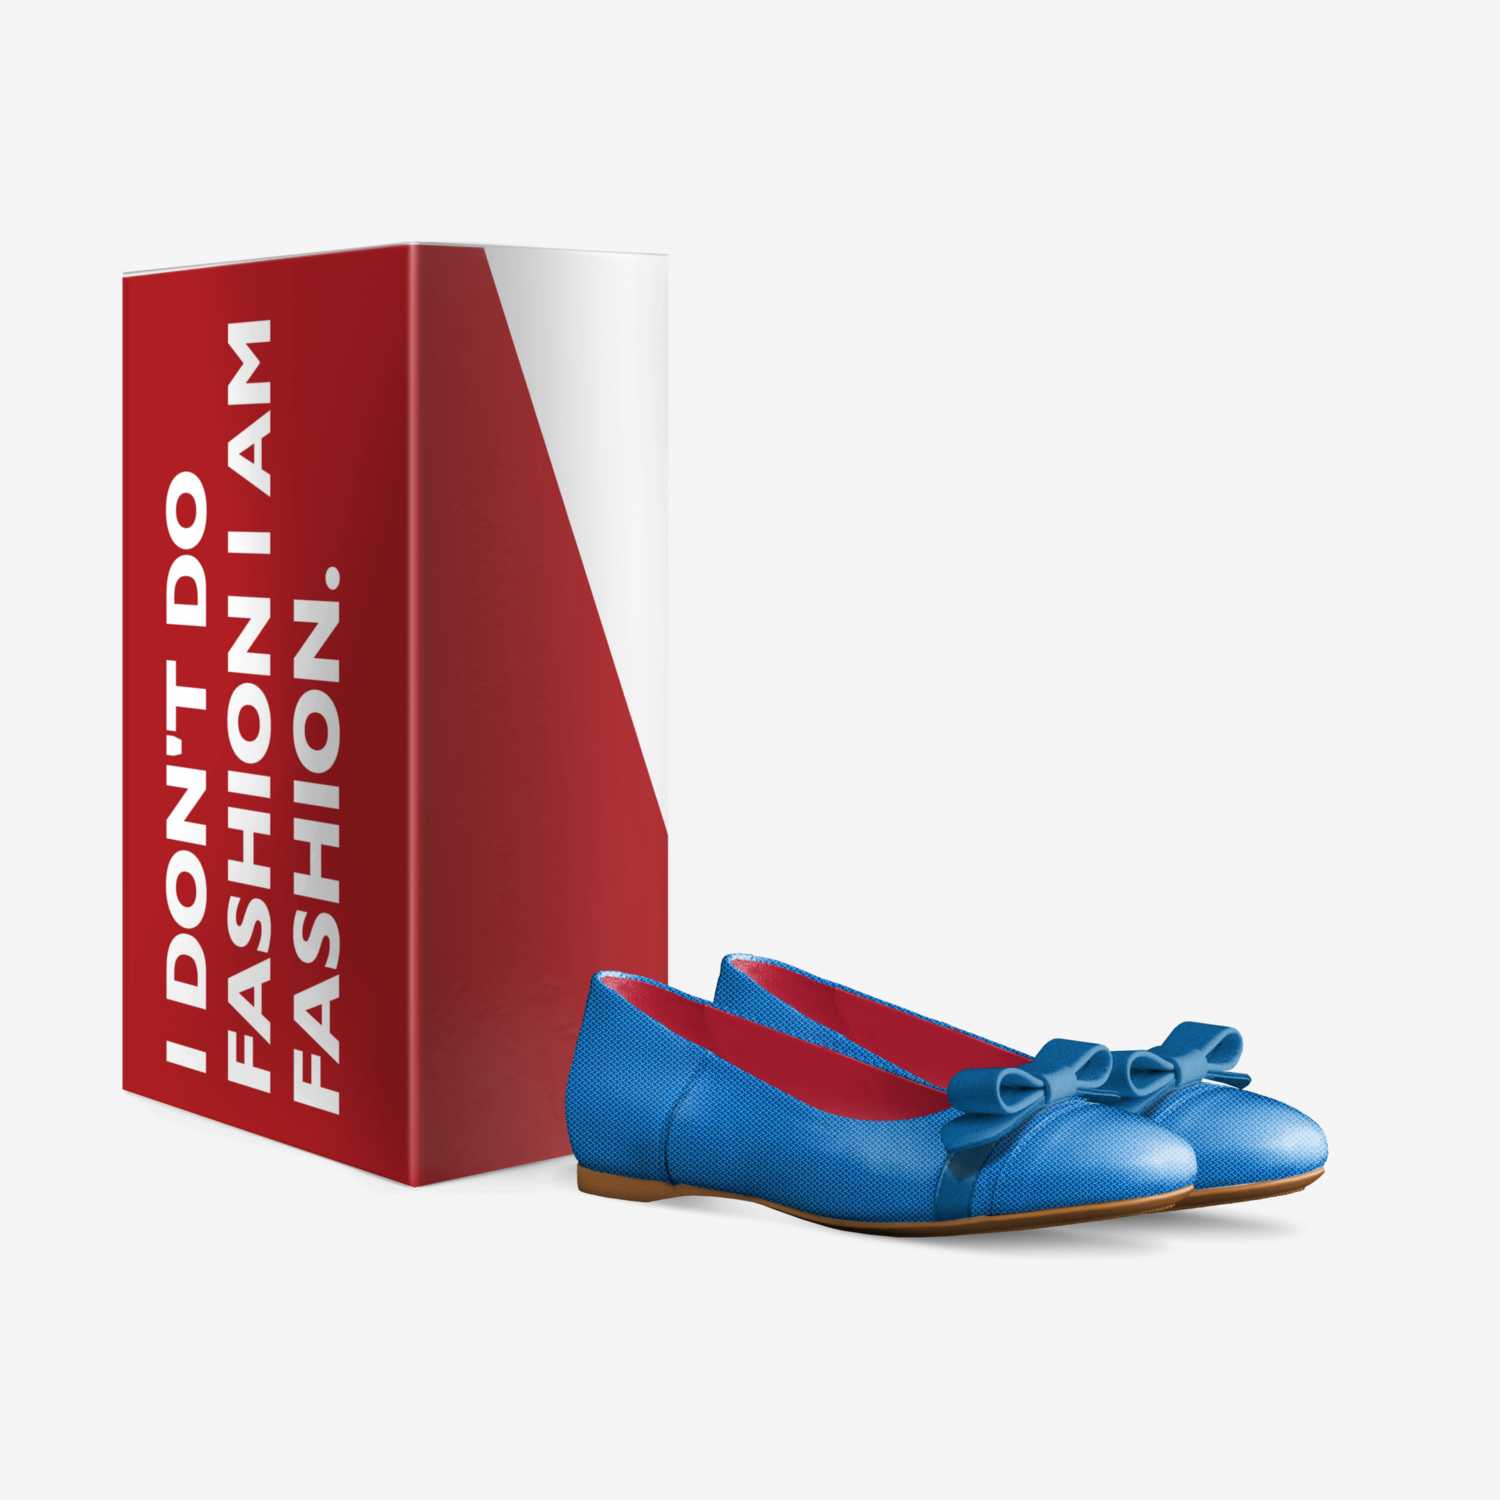 Meshee custom made in Italy shoes by Theodora Howard | Box view